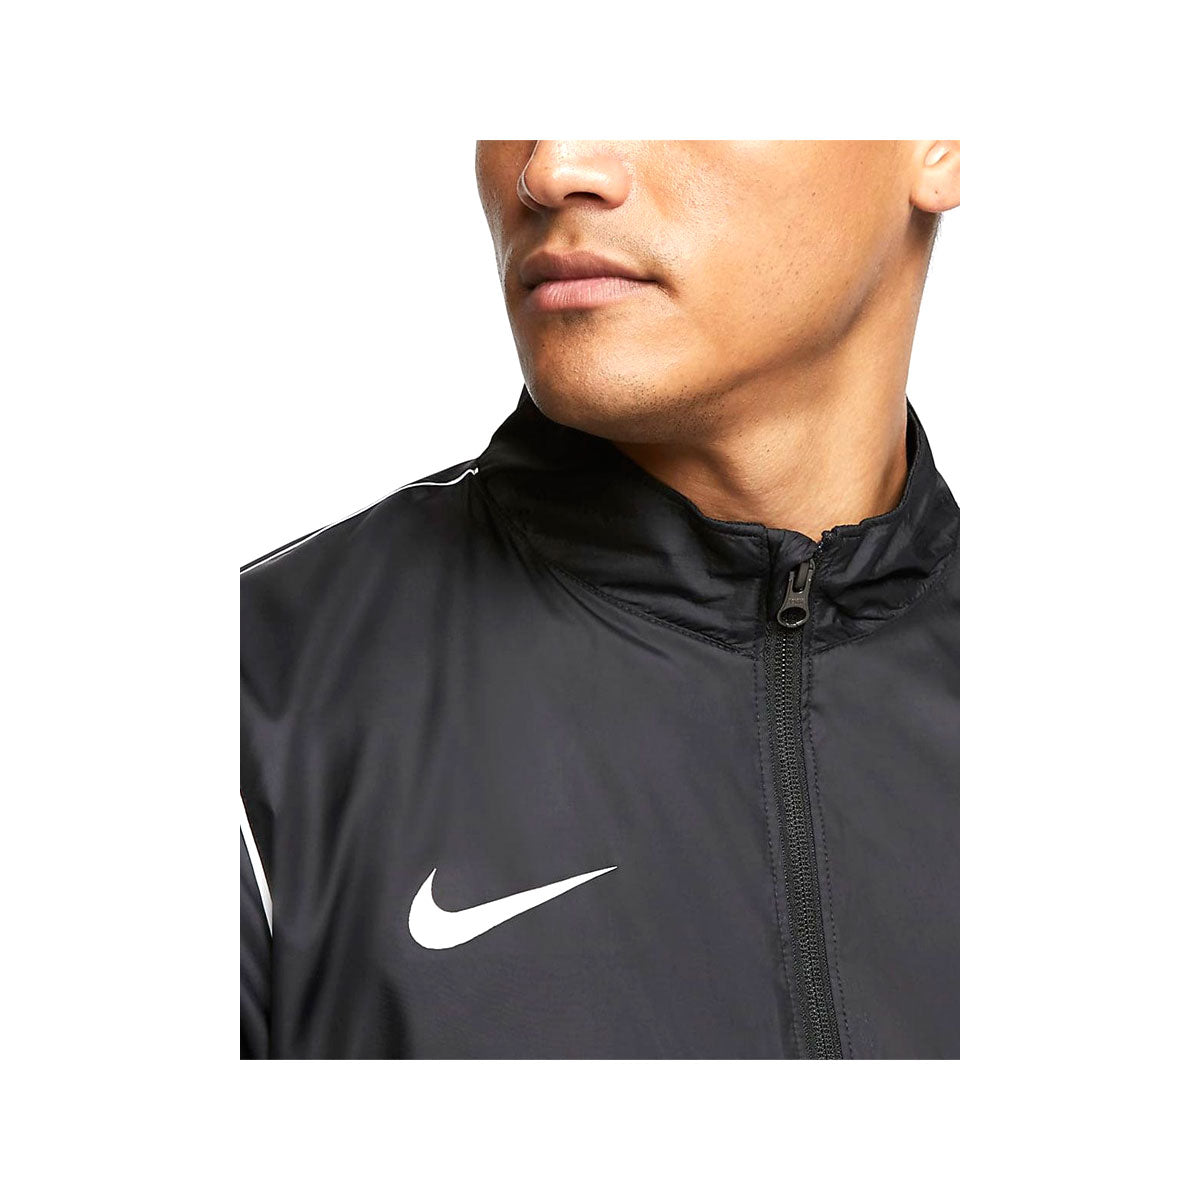 Nike Men's Rain Full Zip Jacket